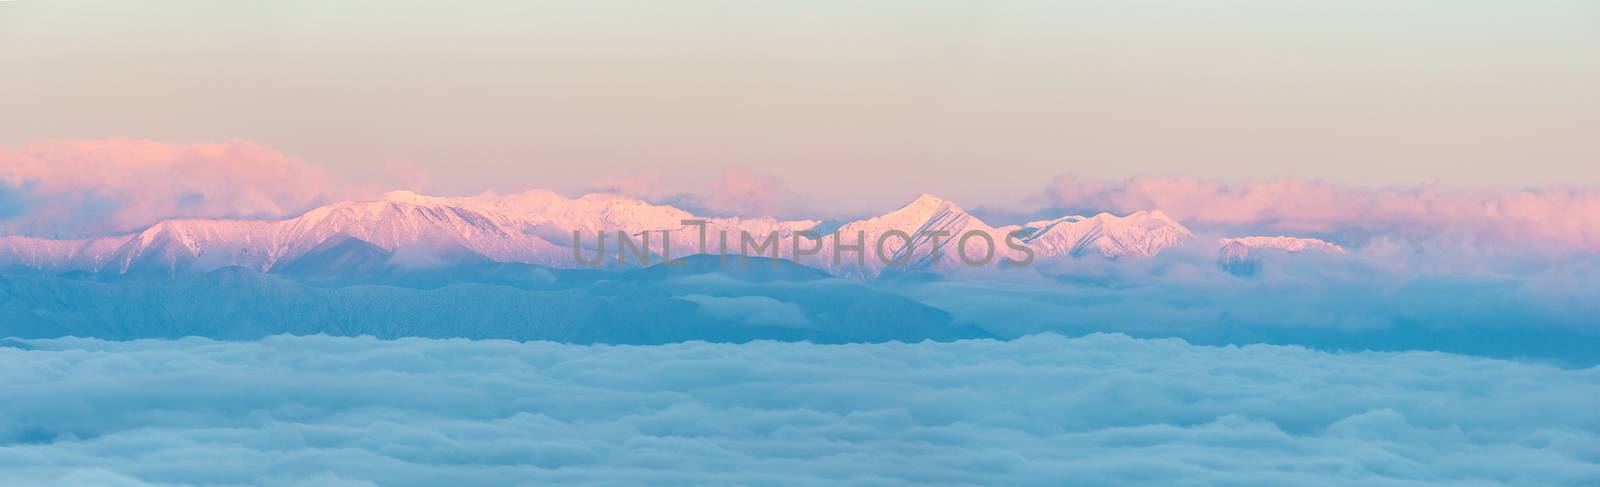 Japan Alps Sunrise by vichie81